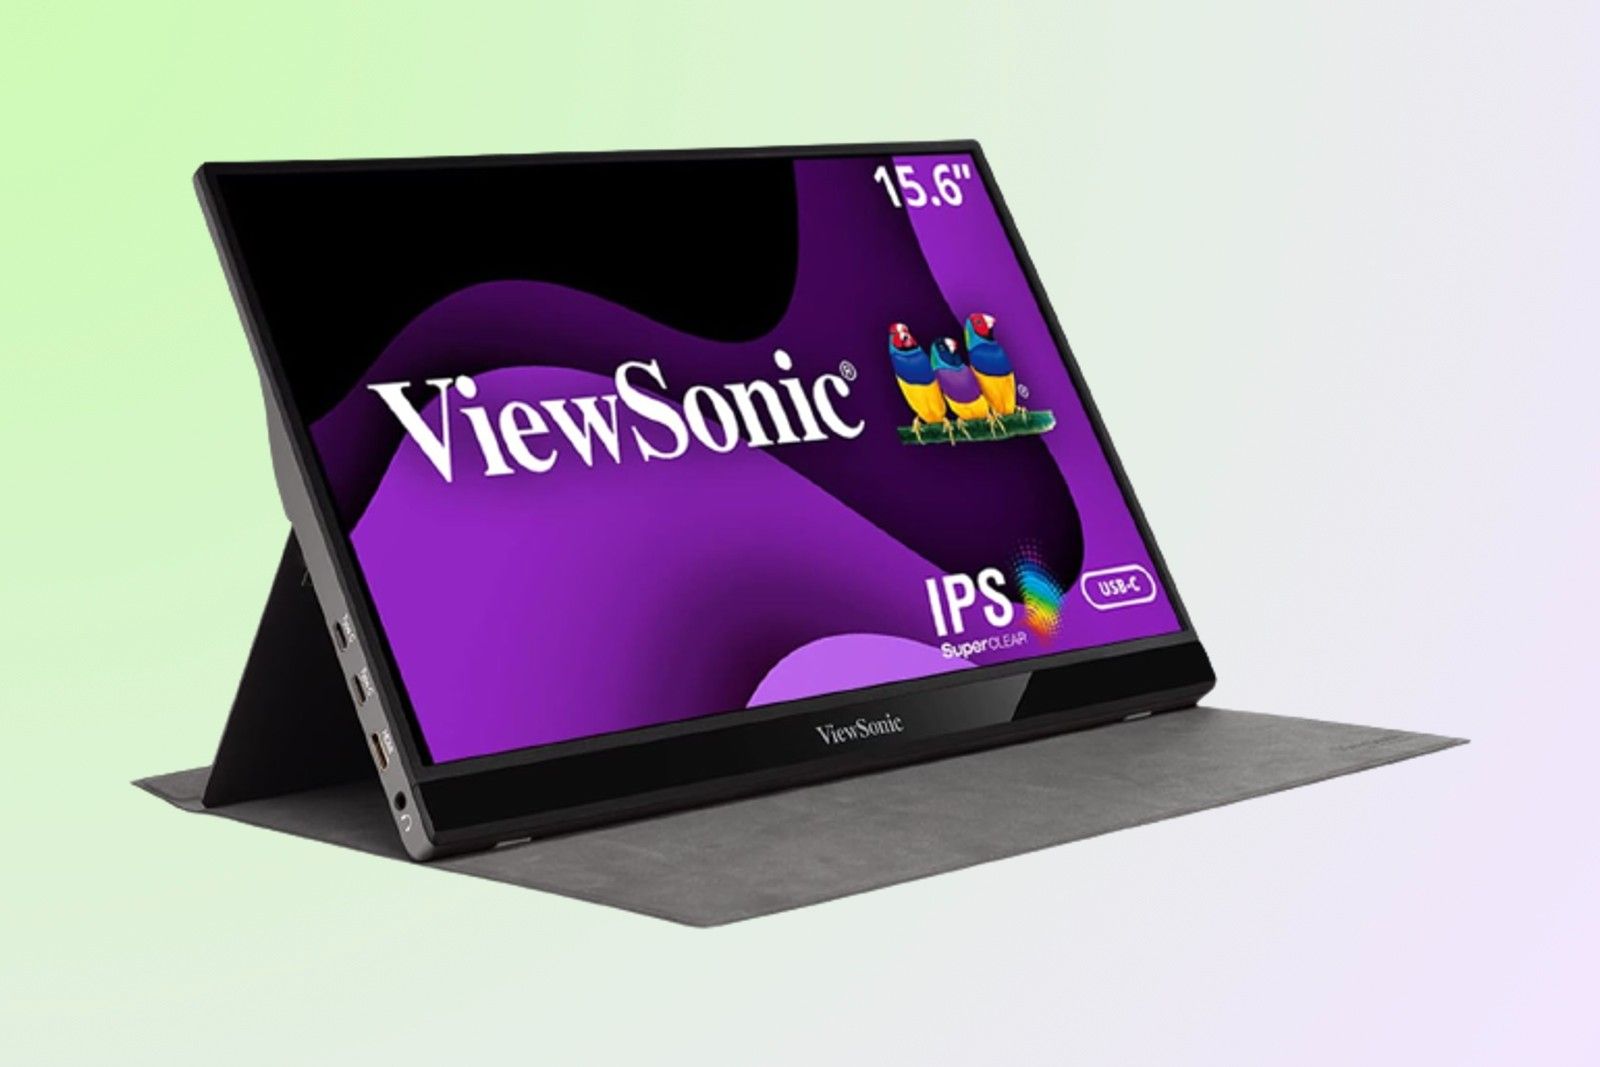 ViewSonic VG1655